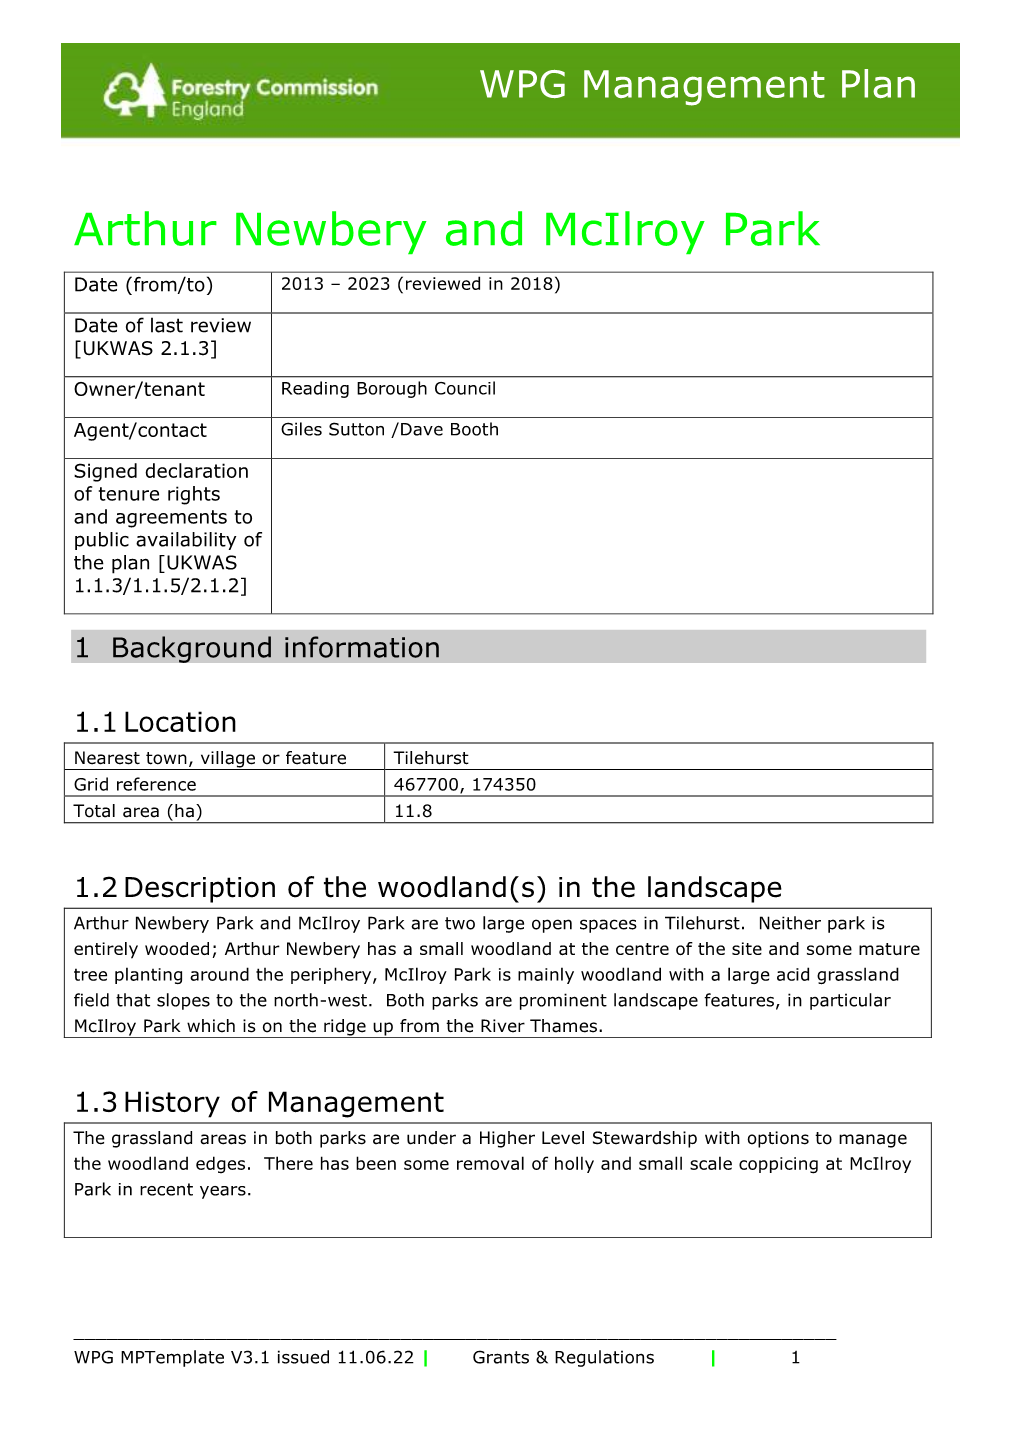 Arthur Newbery and Mcilroy Park